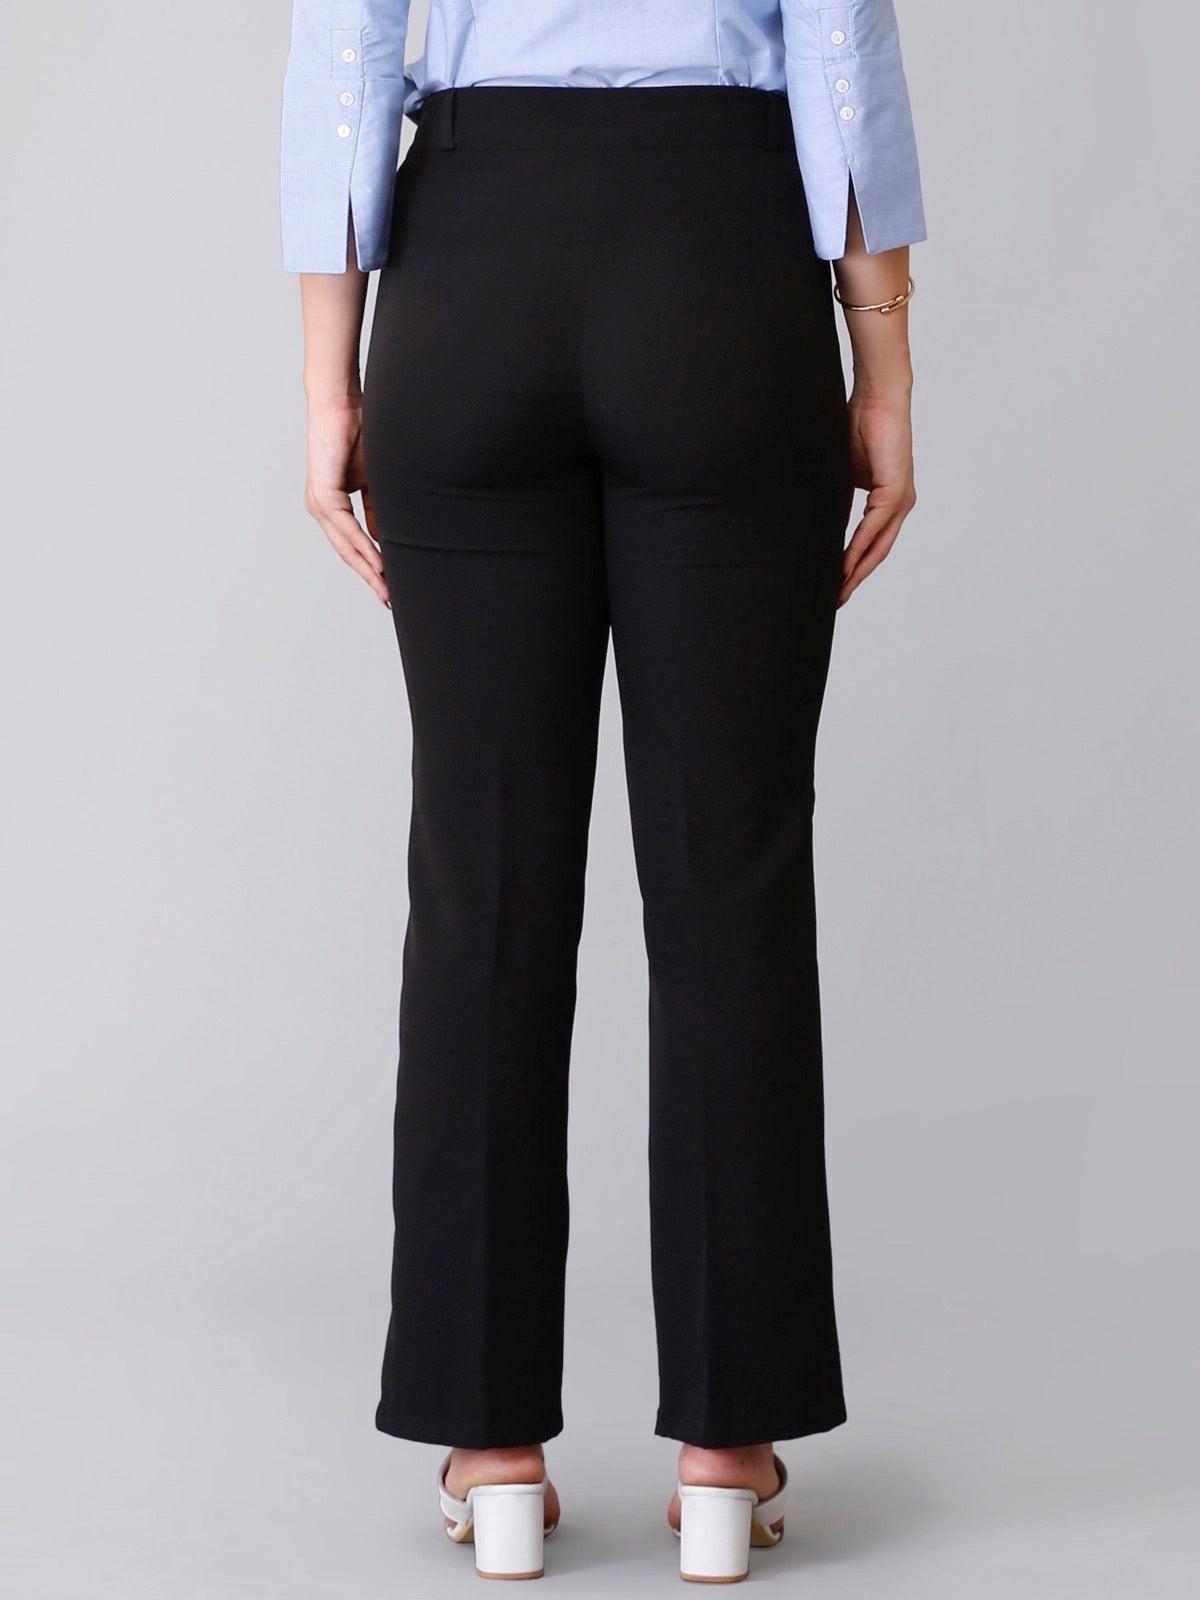 High Waist Pants - Black| Formal Trousers